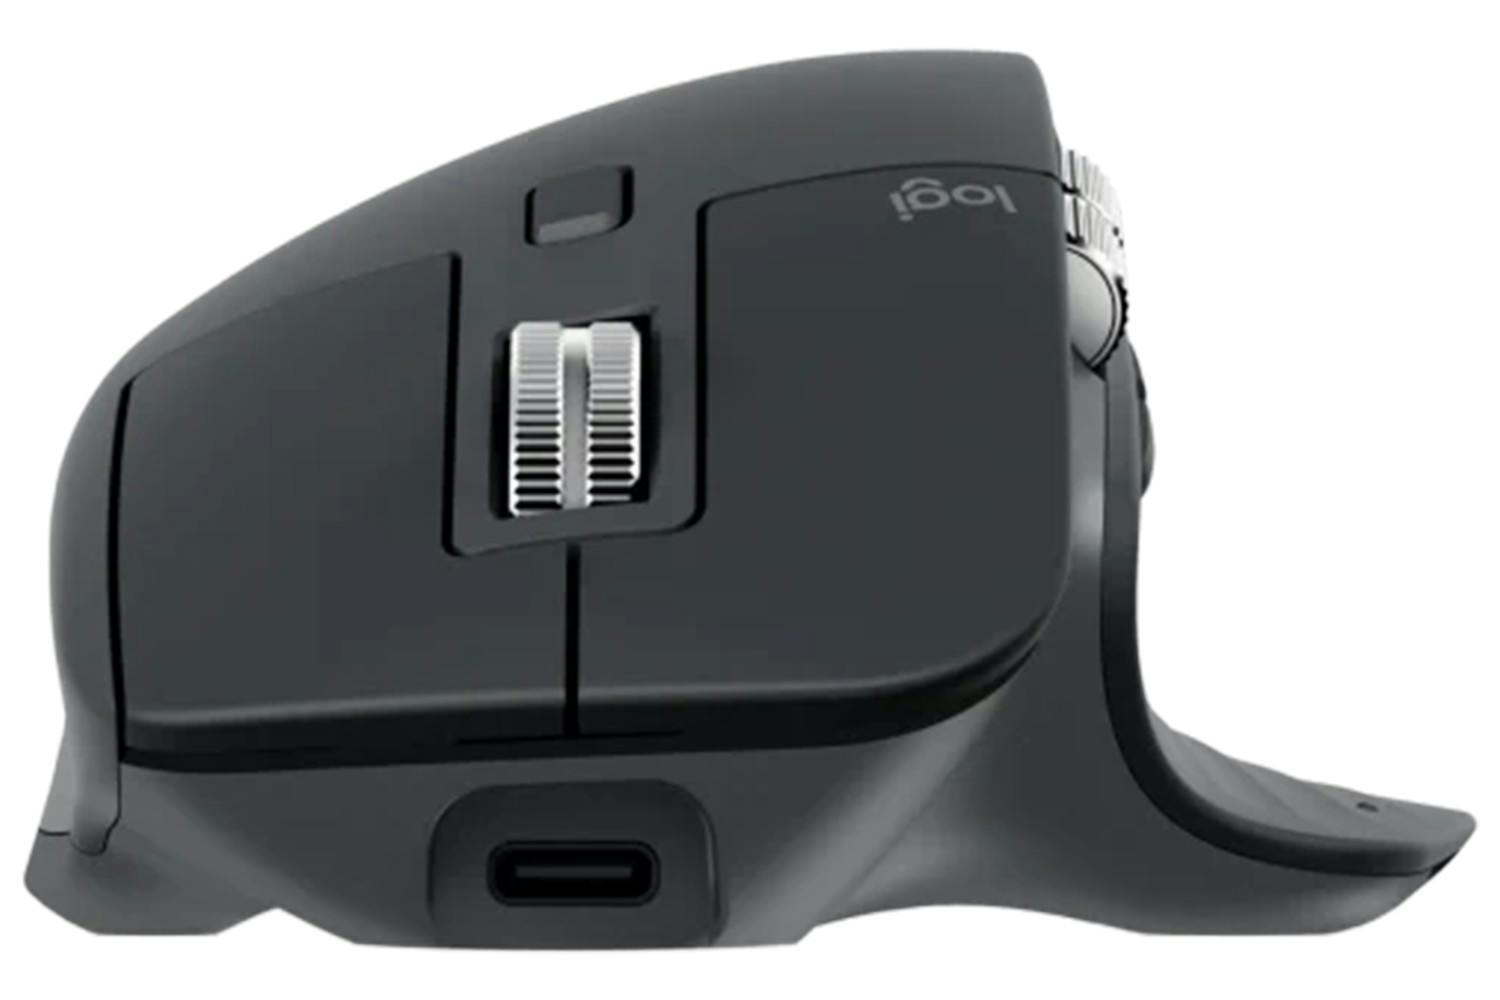  Logitech MX Master 3S - Wireless Performance Mouse, Ergo, 8K  DPI, Track on Glass, Quiet Clicks, USB-C, Bluetooth, Windows, Linux, Chrome  - Graphite - With Free Adobe Creative Cloud Subscription : Electronics